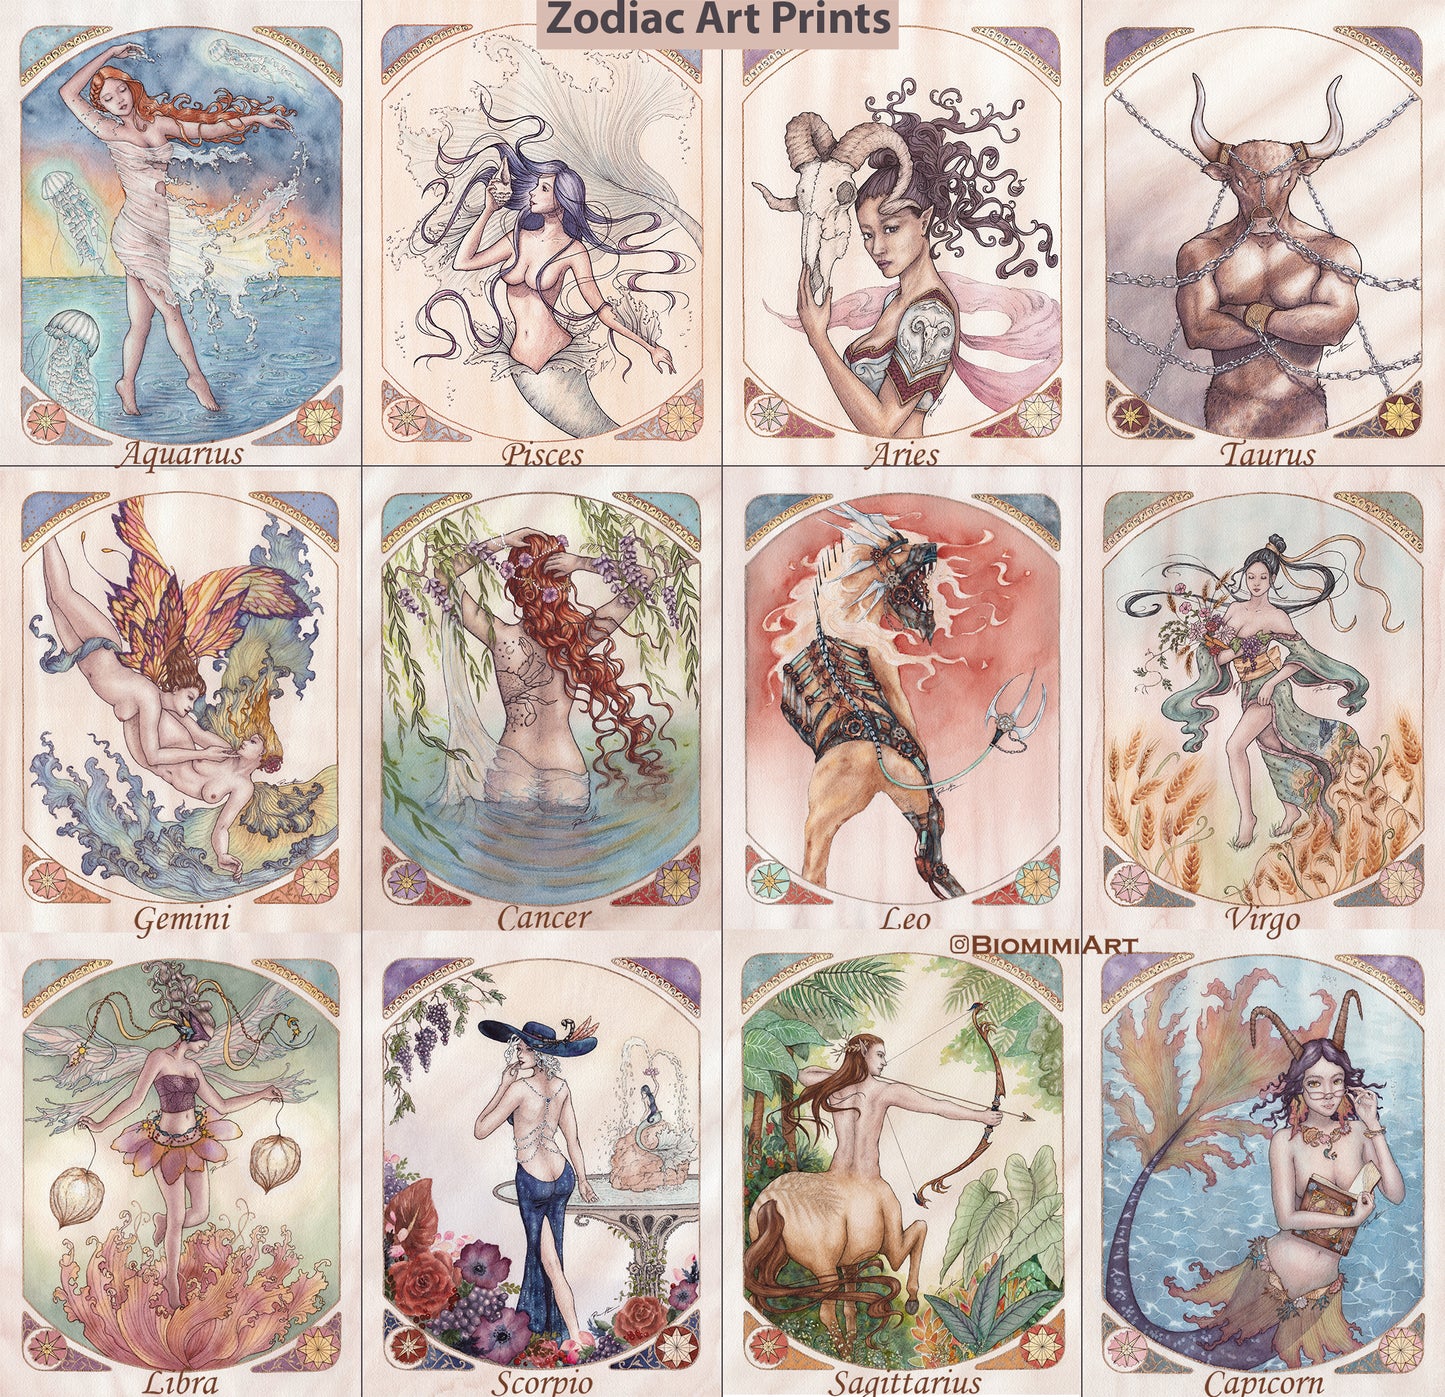 Capricorn - Zodiac Series